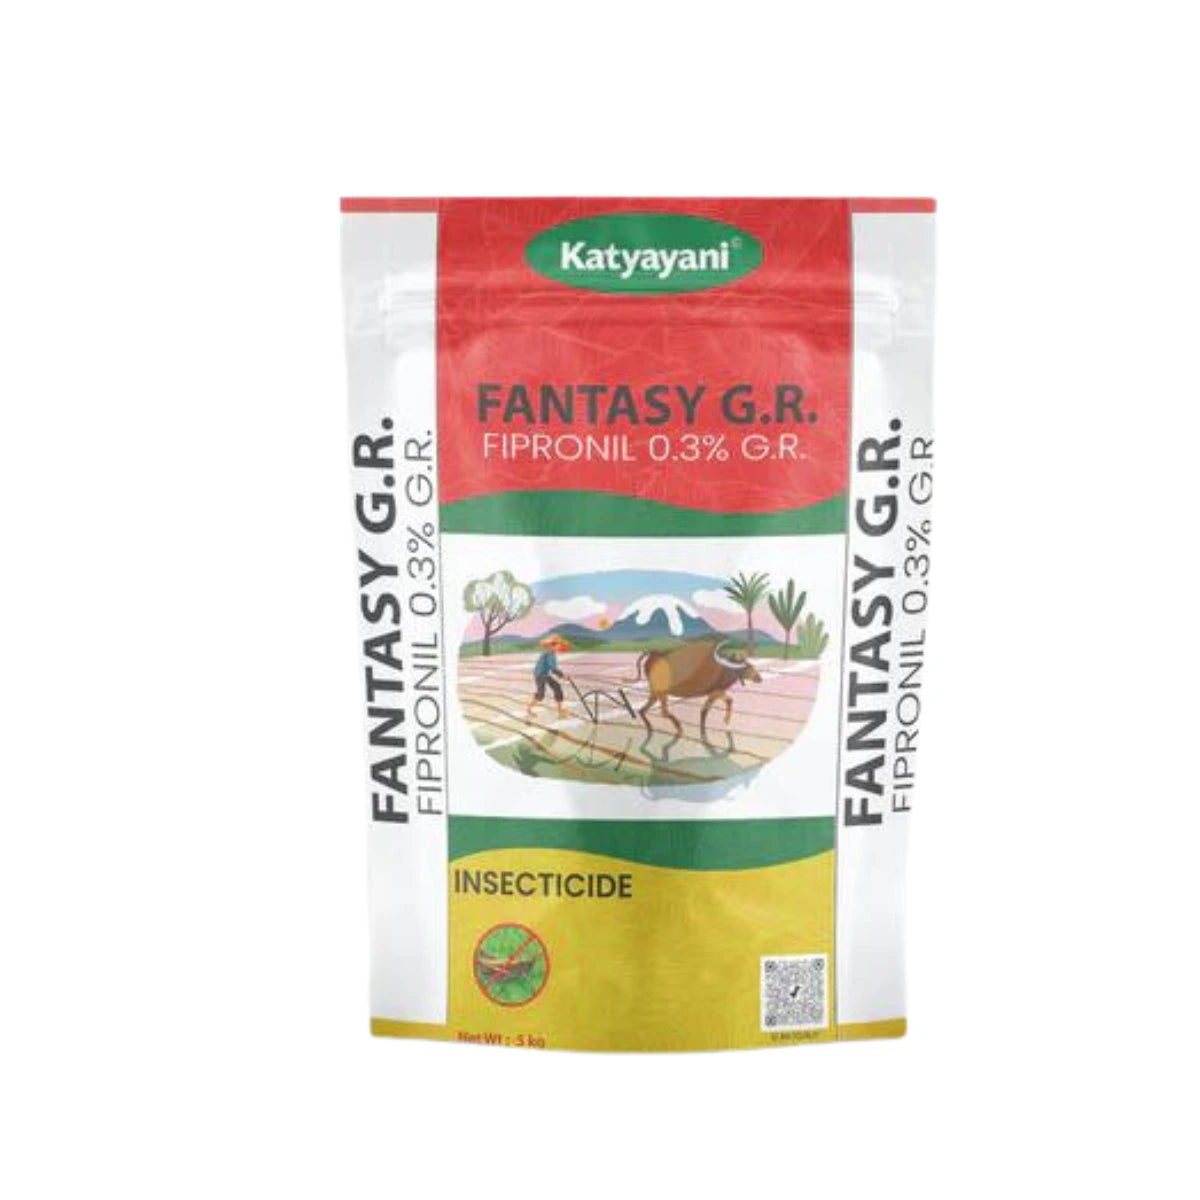 Katyayani Fantasy ( Fipronil 0.3% GR) | Insecticide